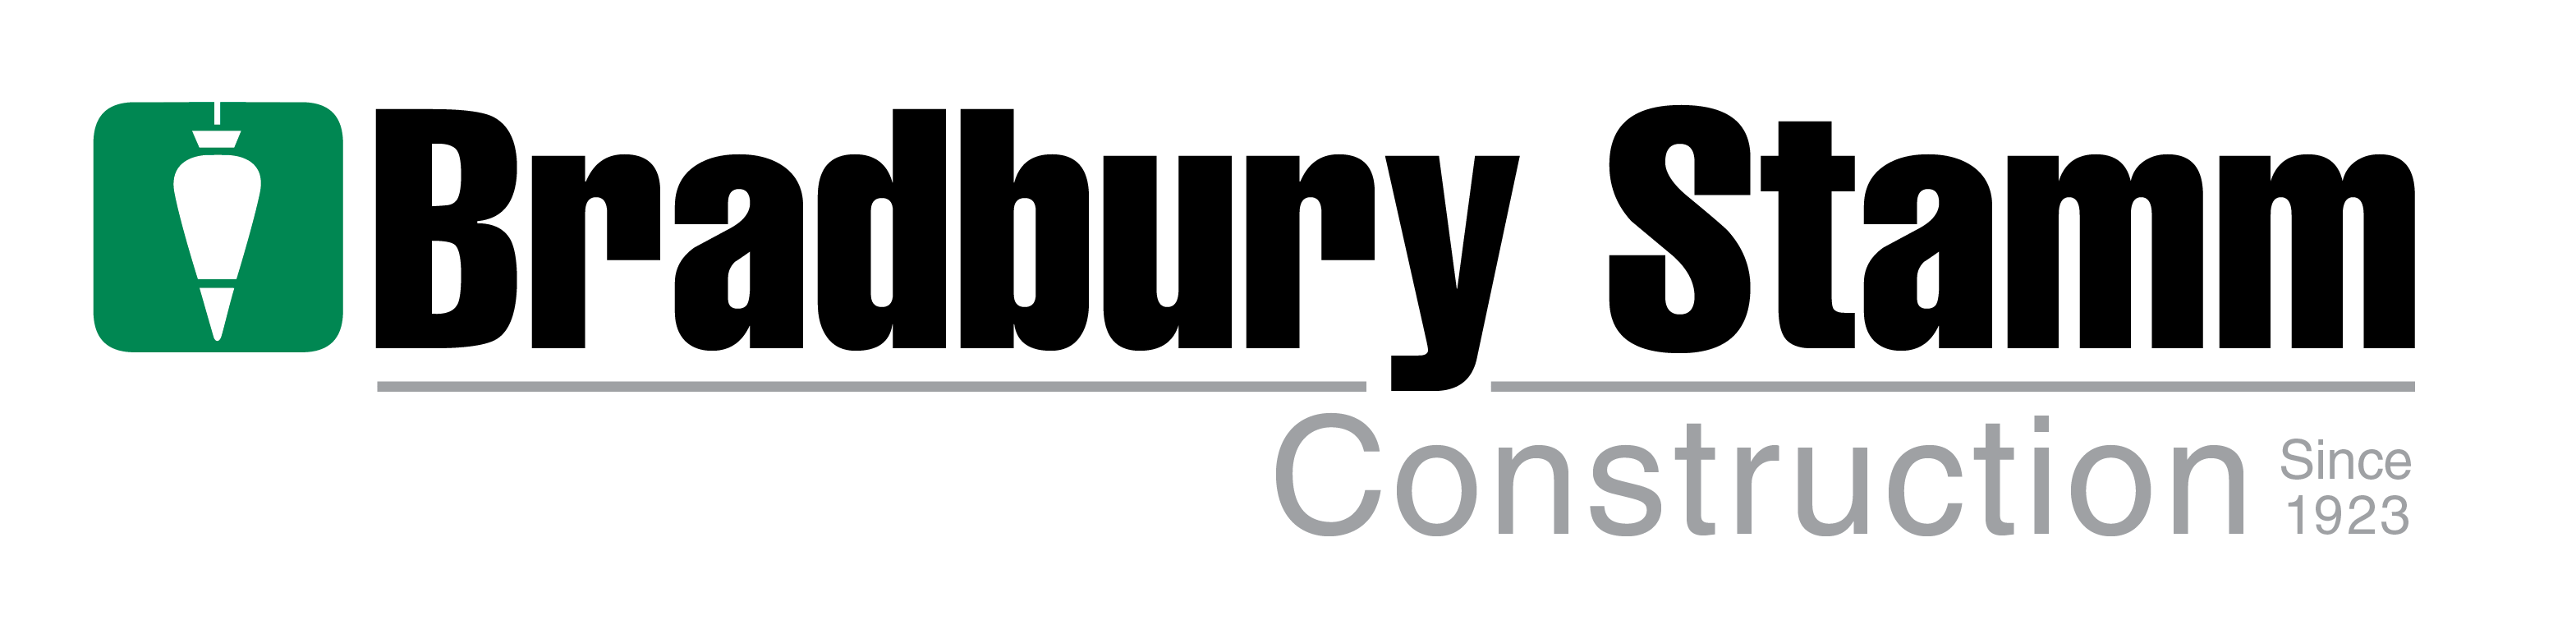 Bradbury Stamm Construction logo